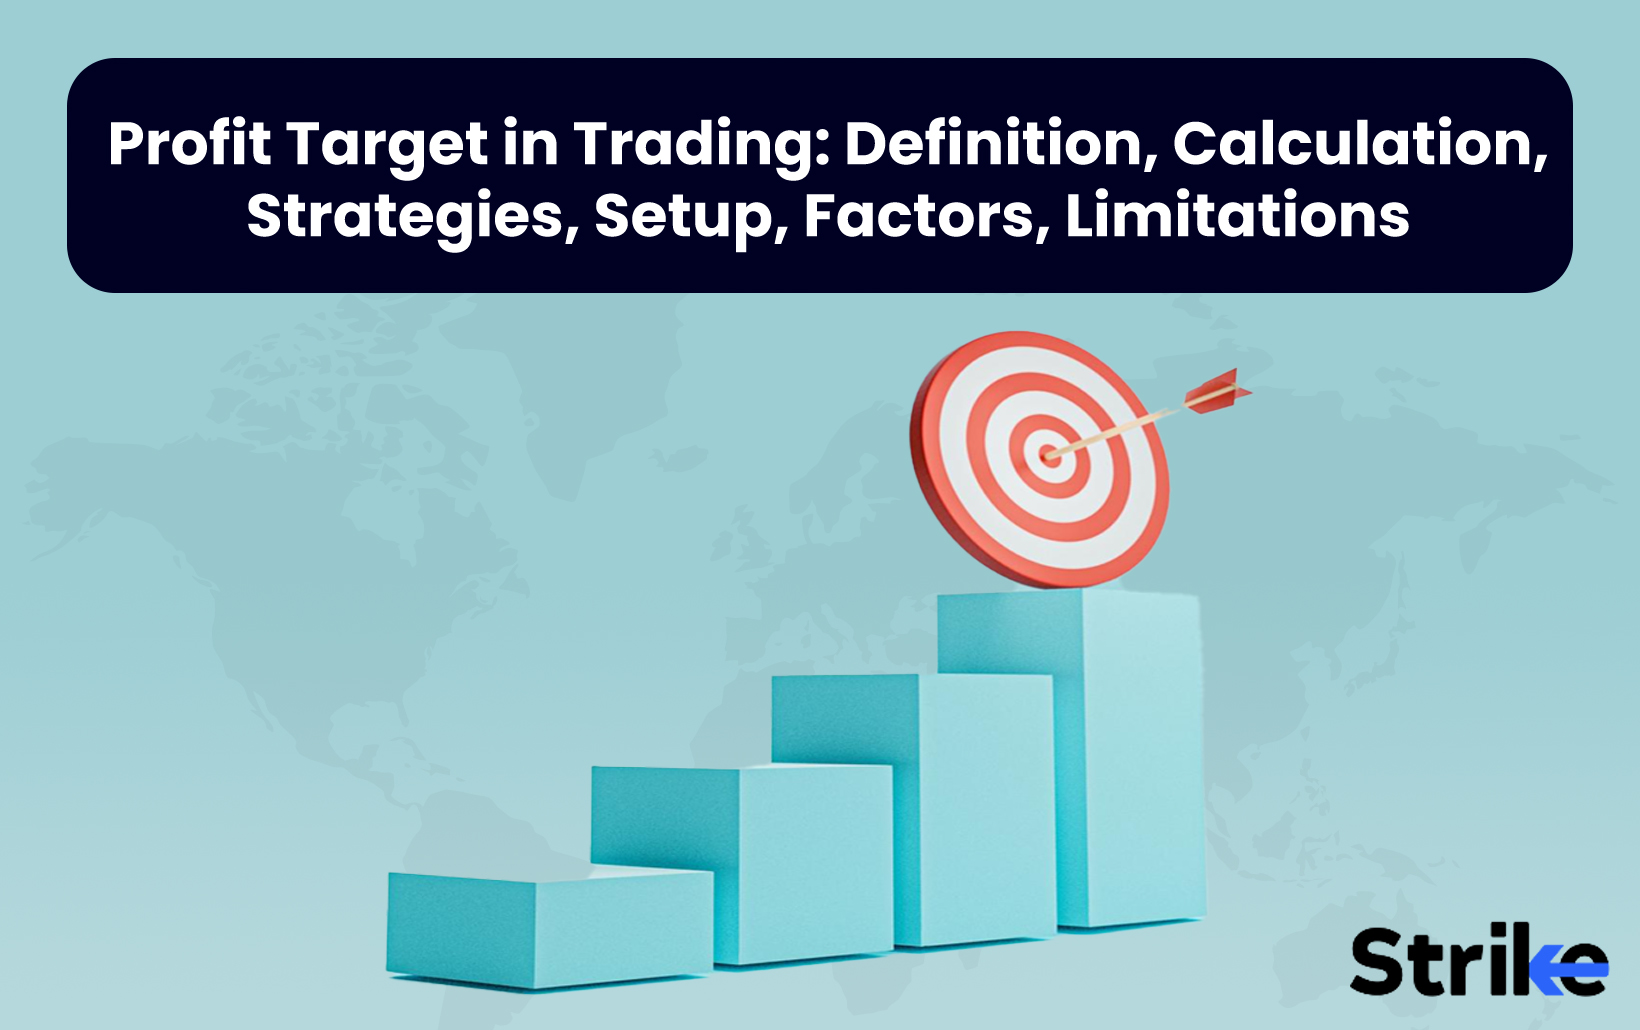 Profit Target in Trading: Definition, Calculation, Strategies, Setup, Factors, Limitations